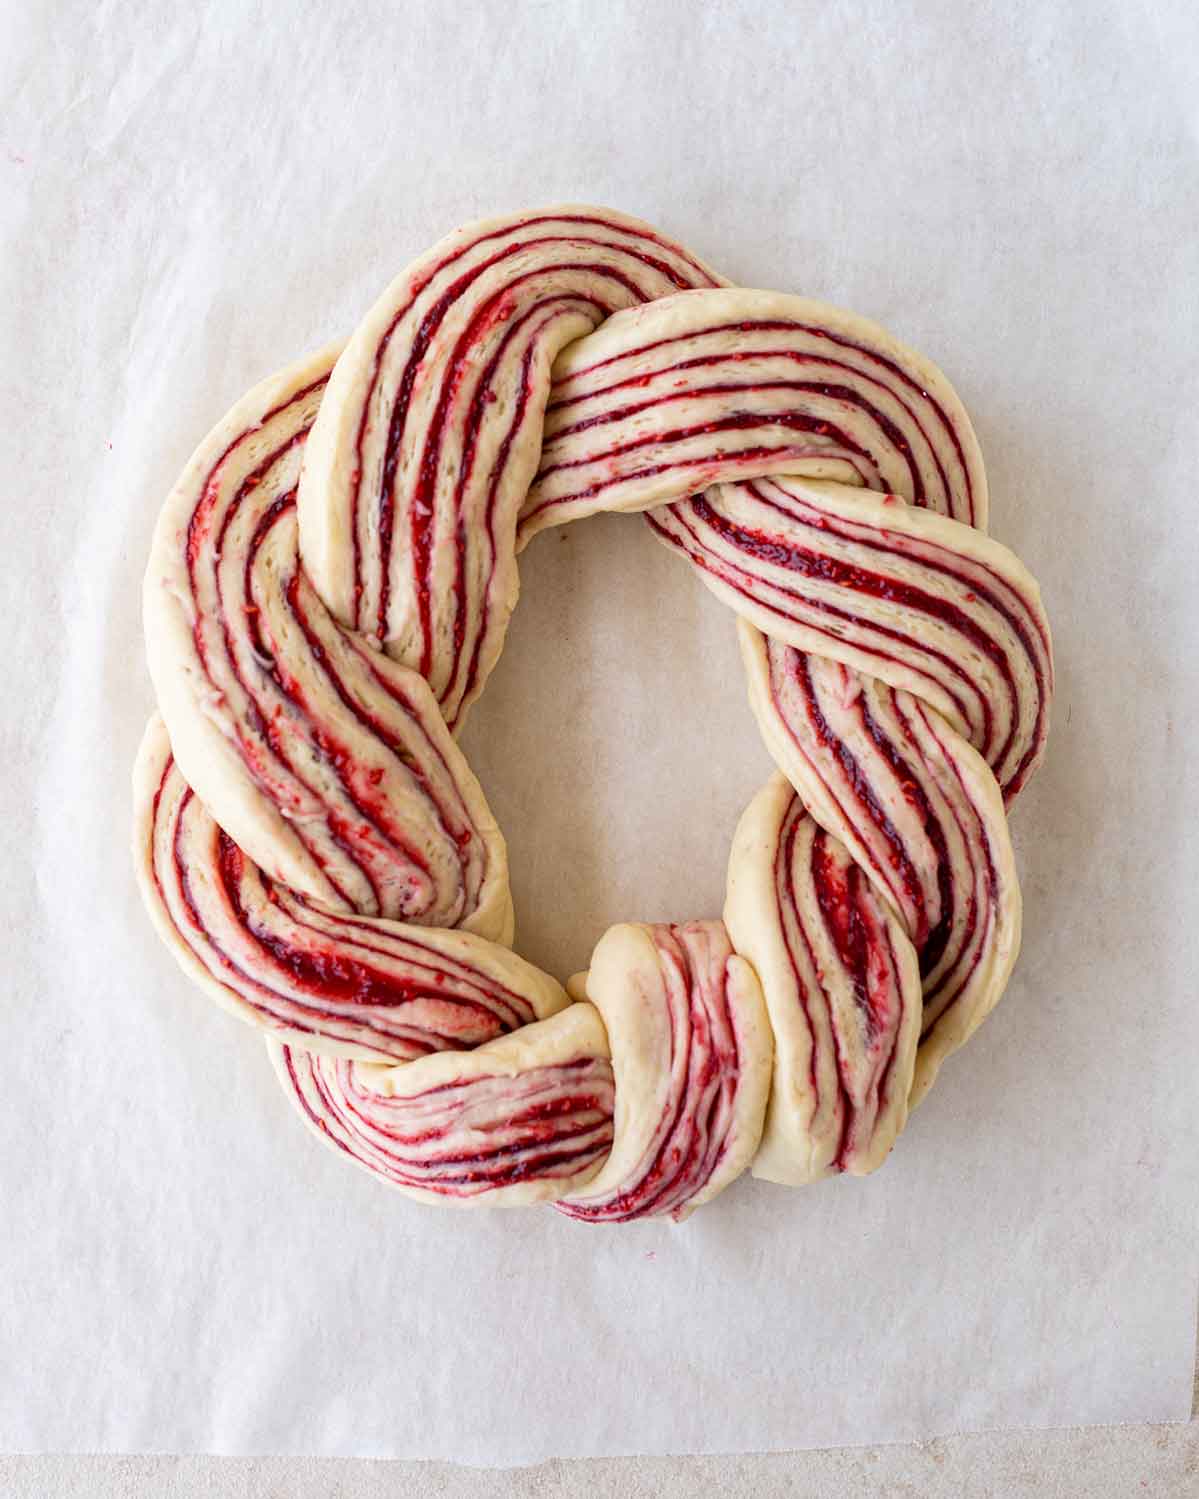 Unbaked raspberry wreath on baking paper.